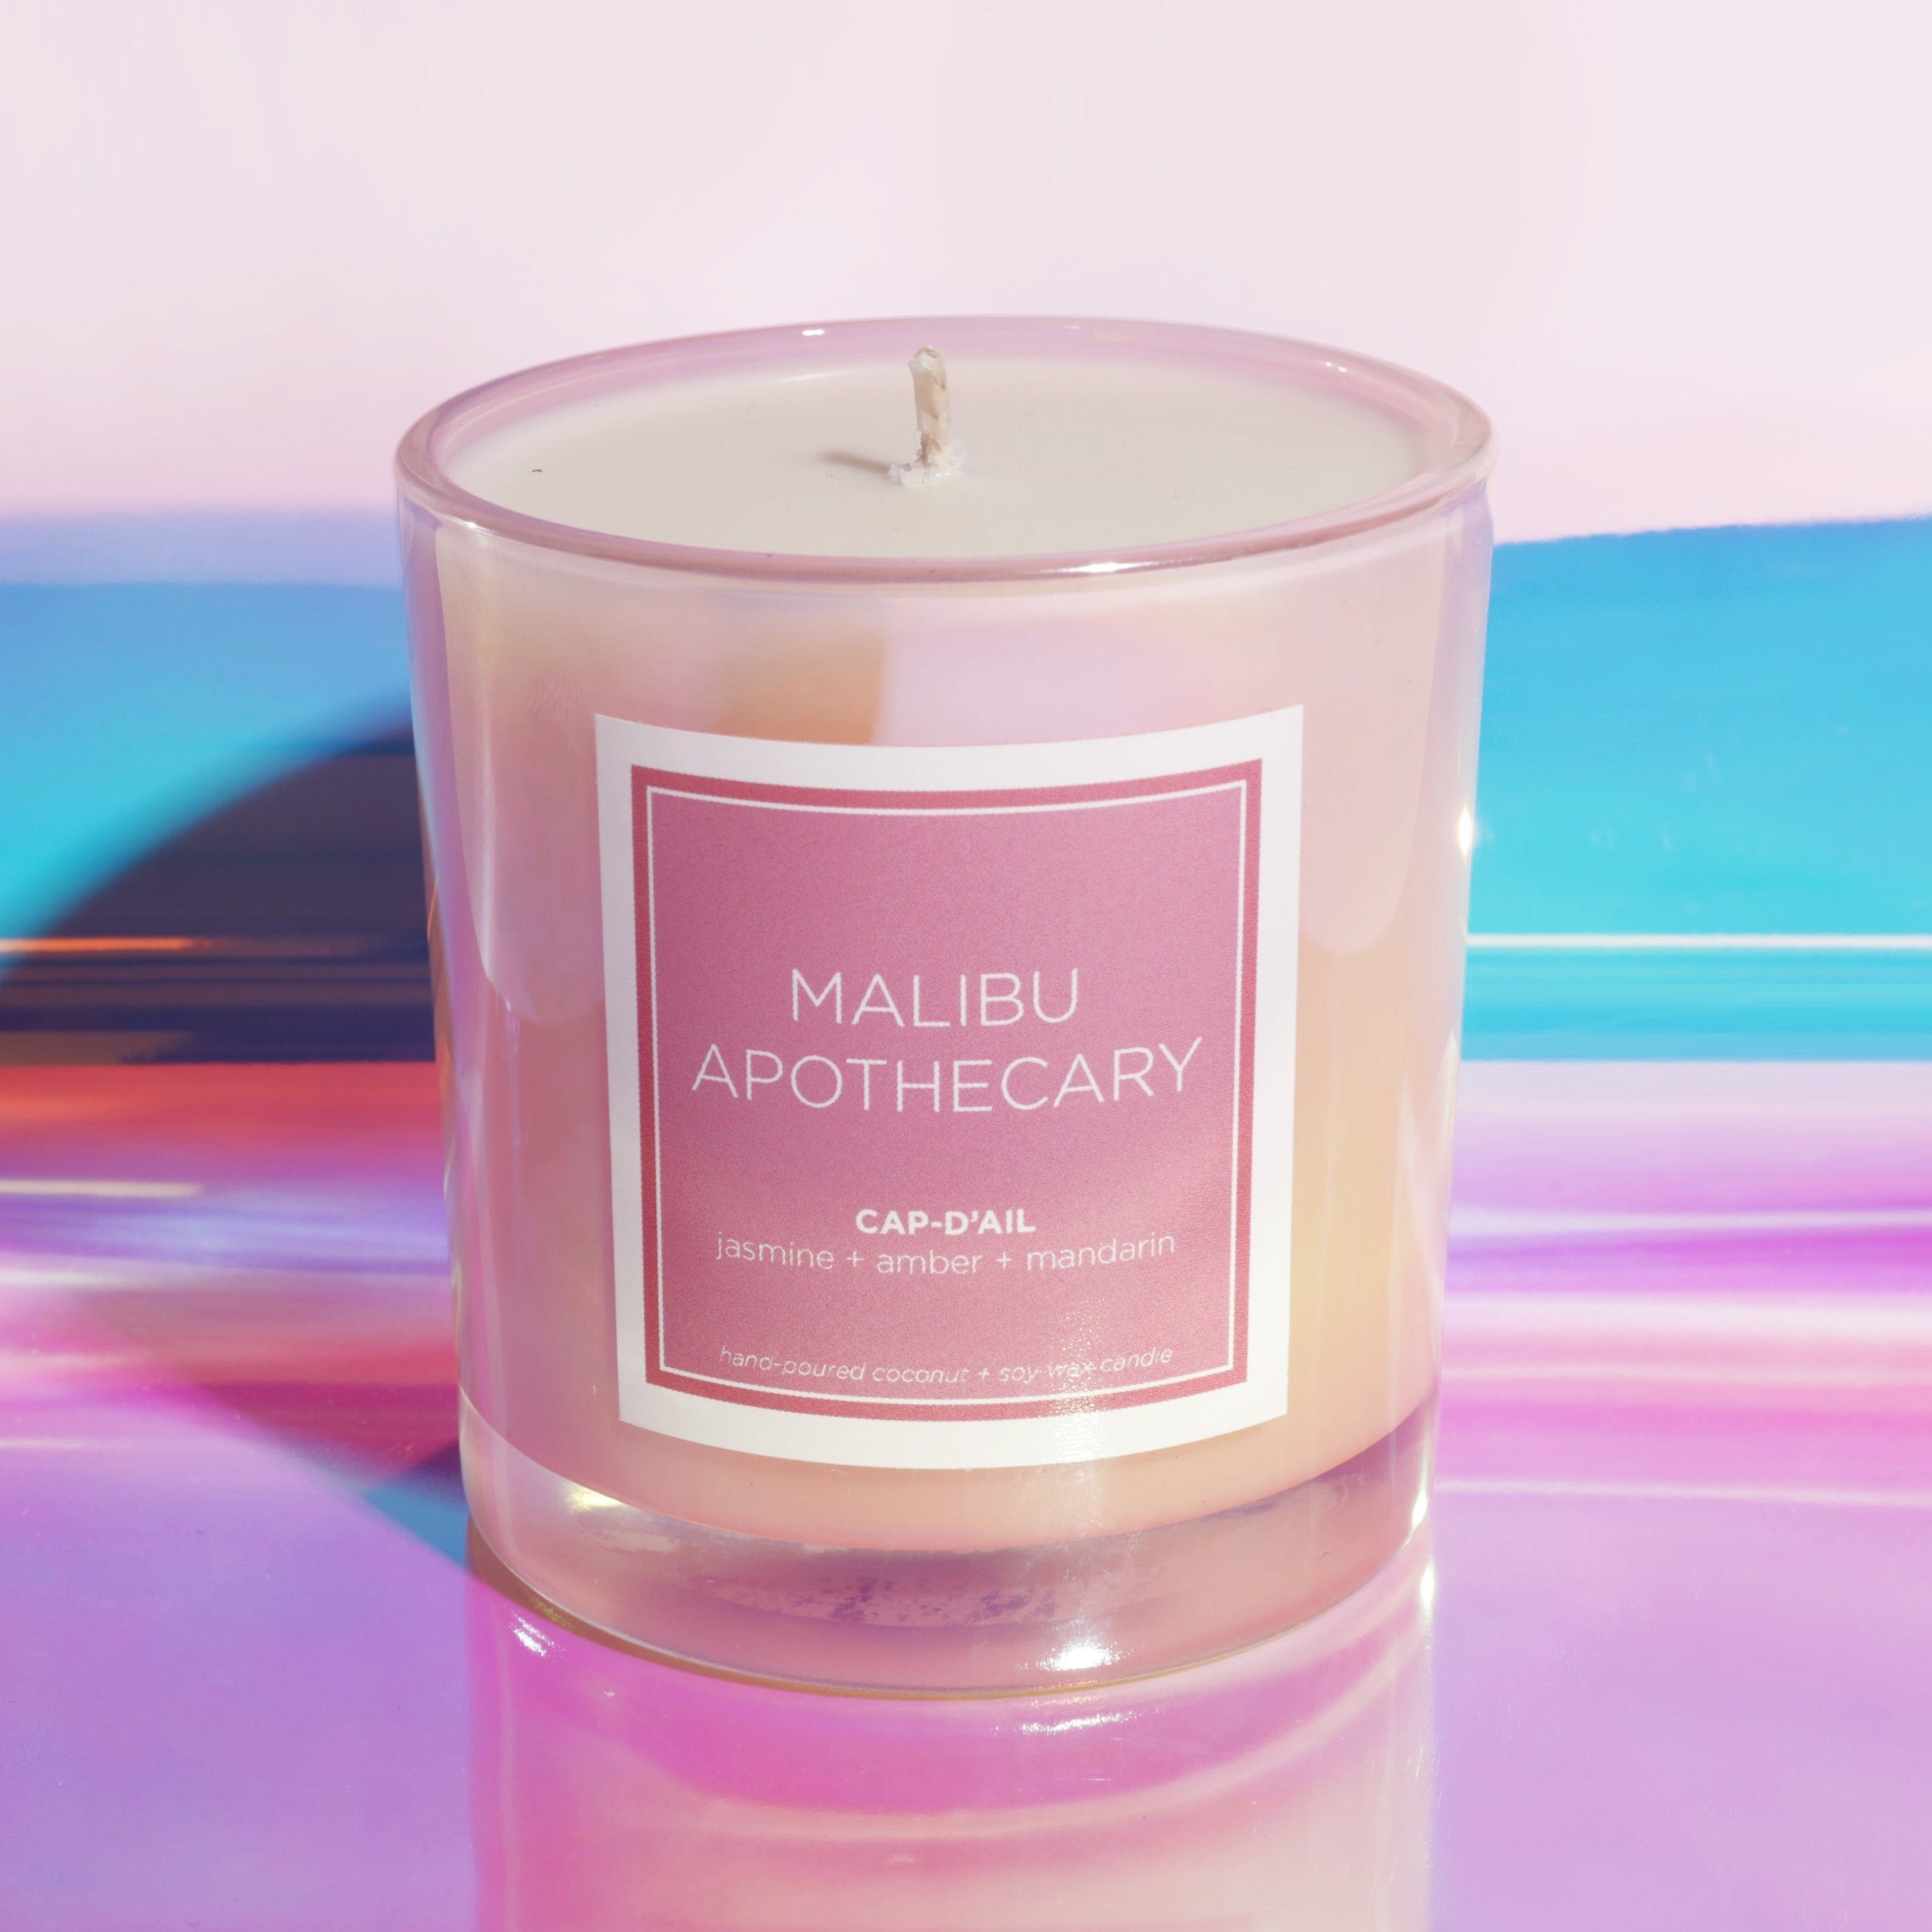 Iridescent Pink Candle by Malibu Apothecary